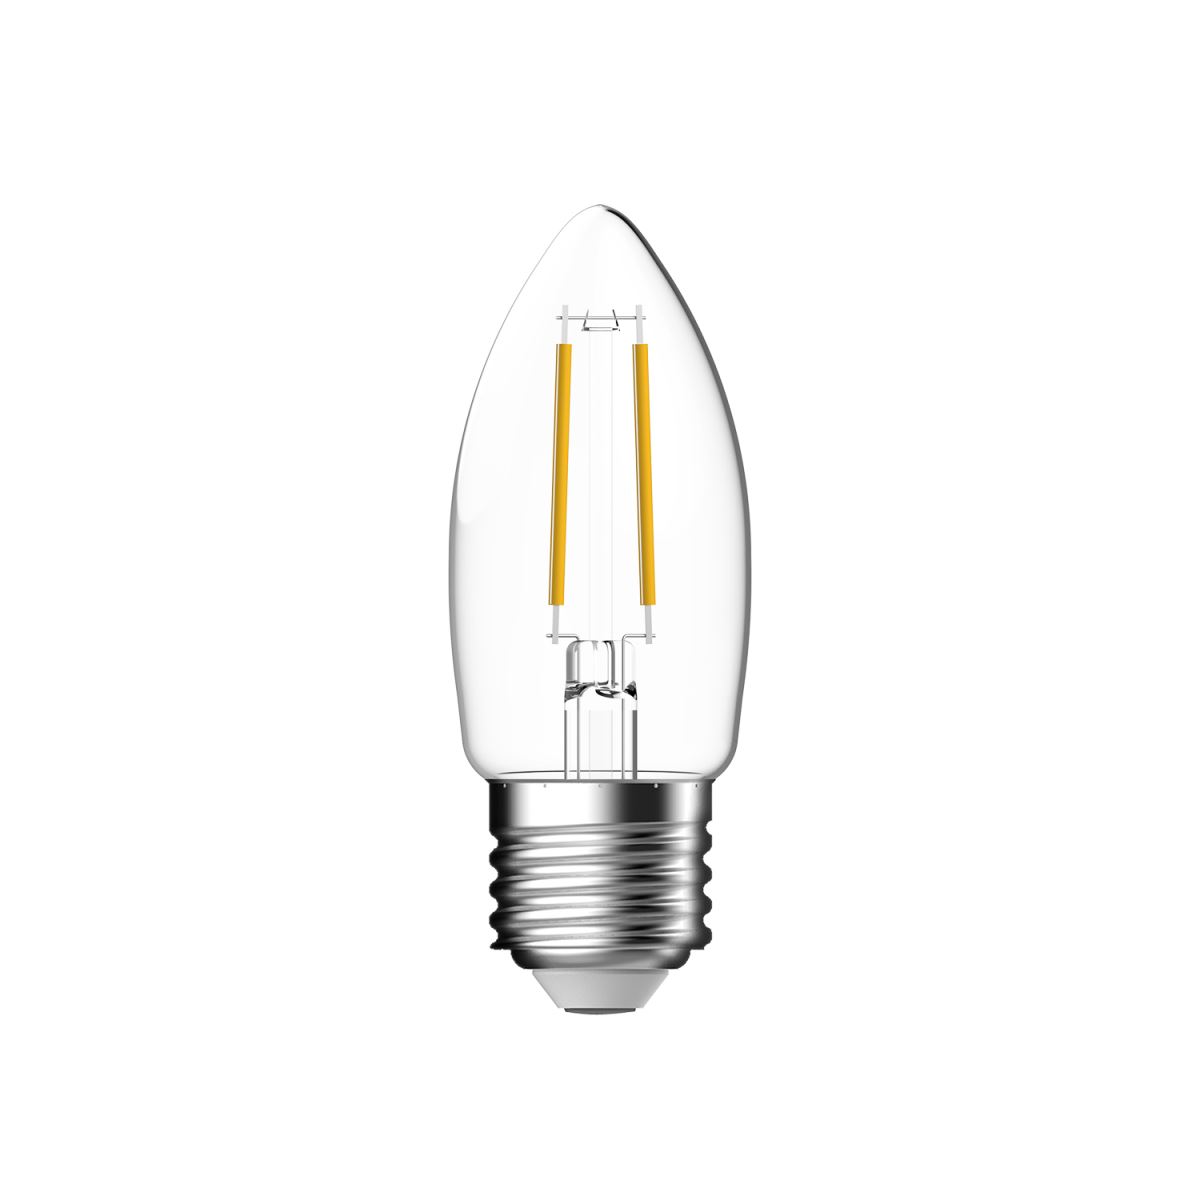 Nordlux Energetic LED Leuchtmittel E27 Filament klar 250lm 2700K 2,1W 80Ra 360° 3,5x3,5x9,7cm von Energetic